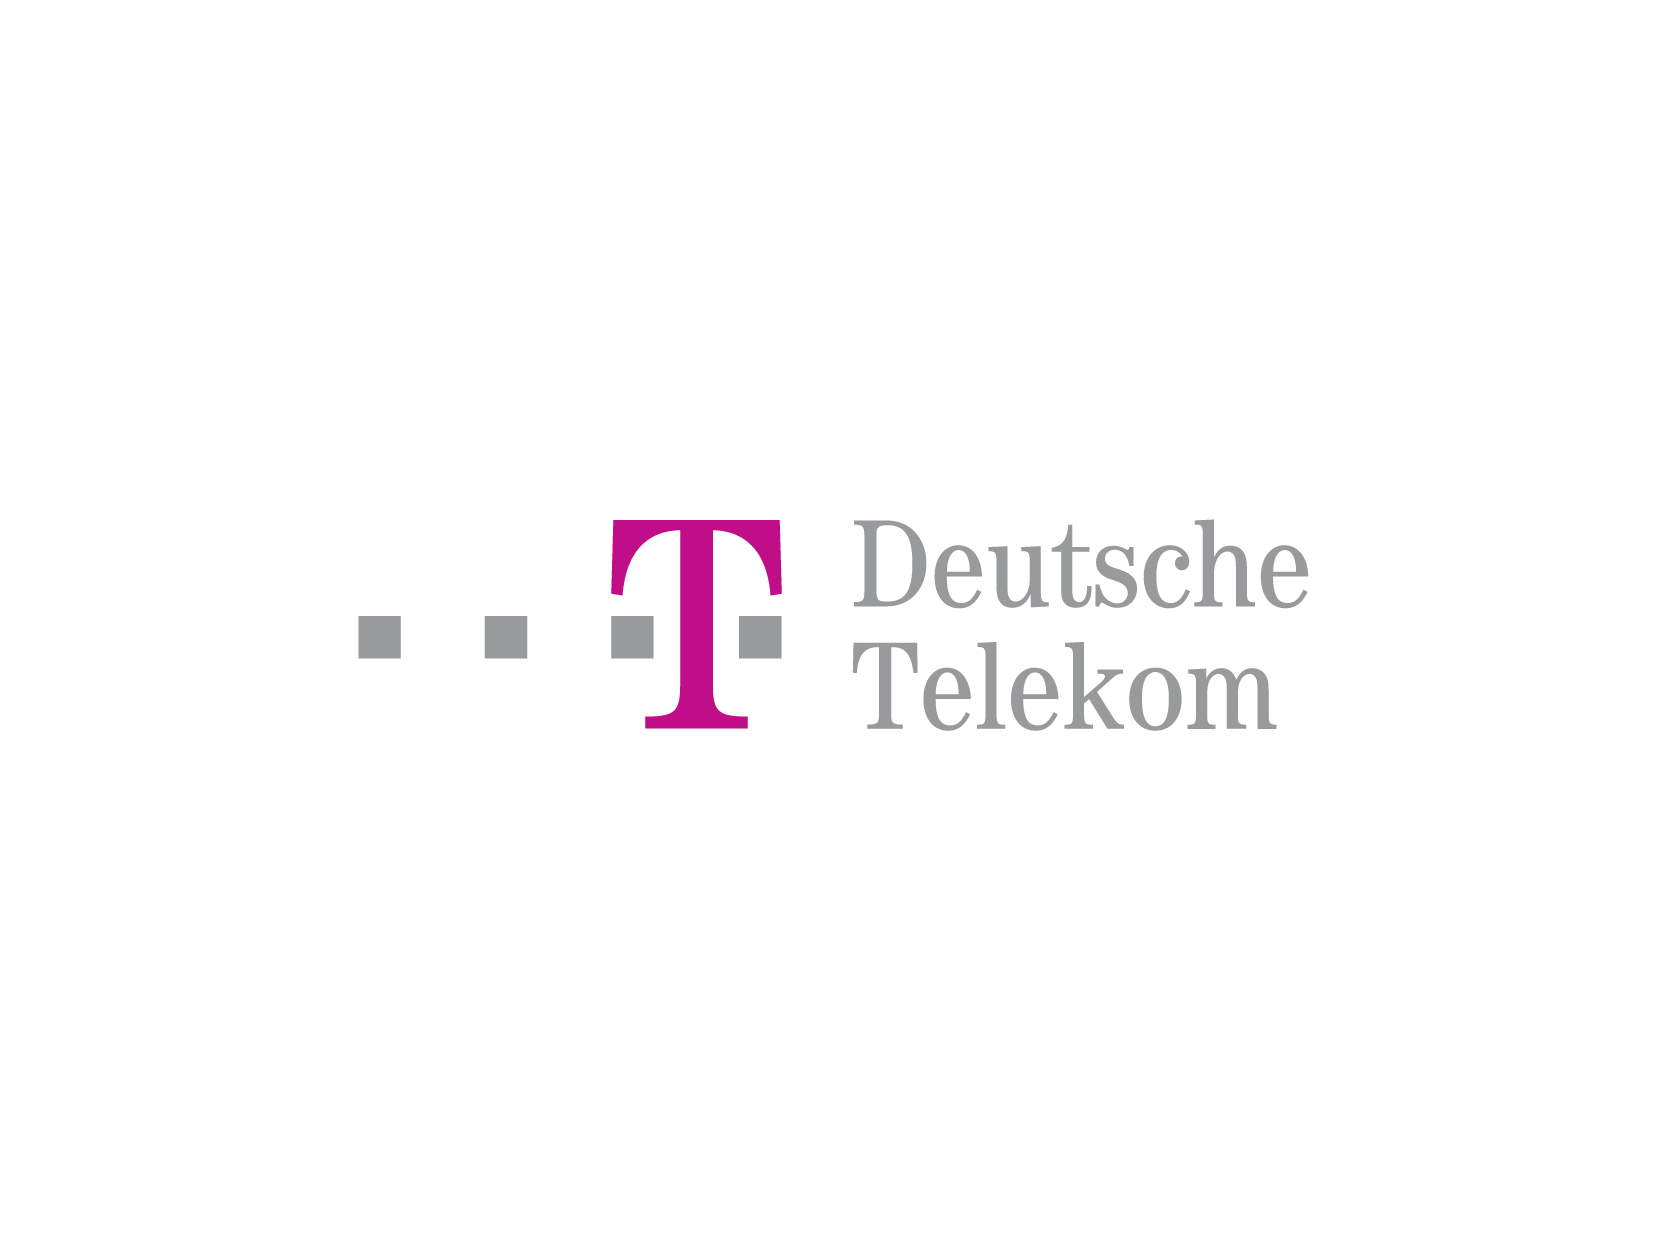 DETECON德国电信logo高清图标